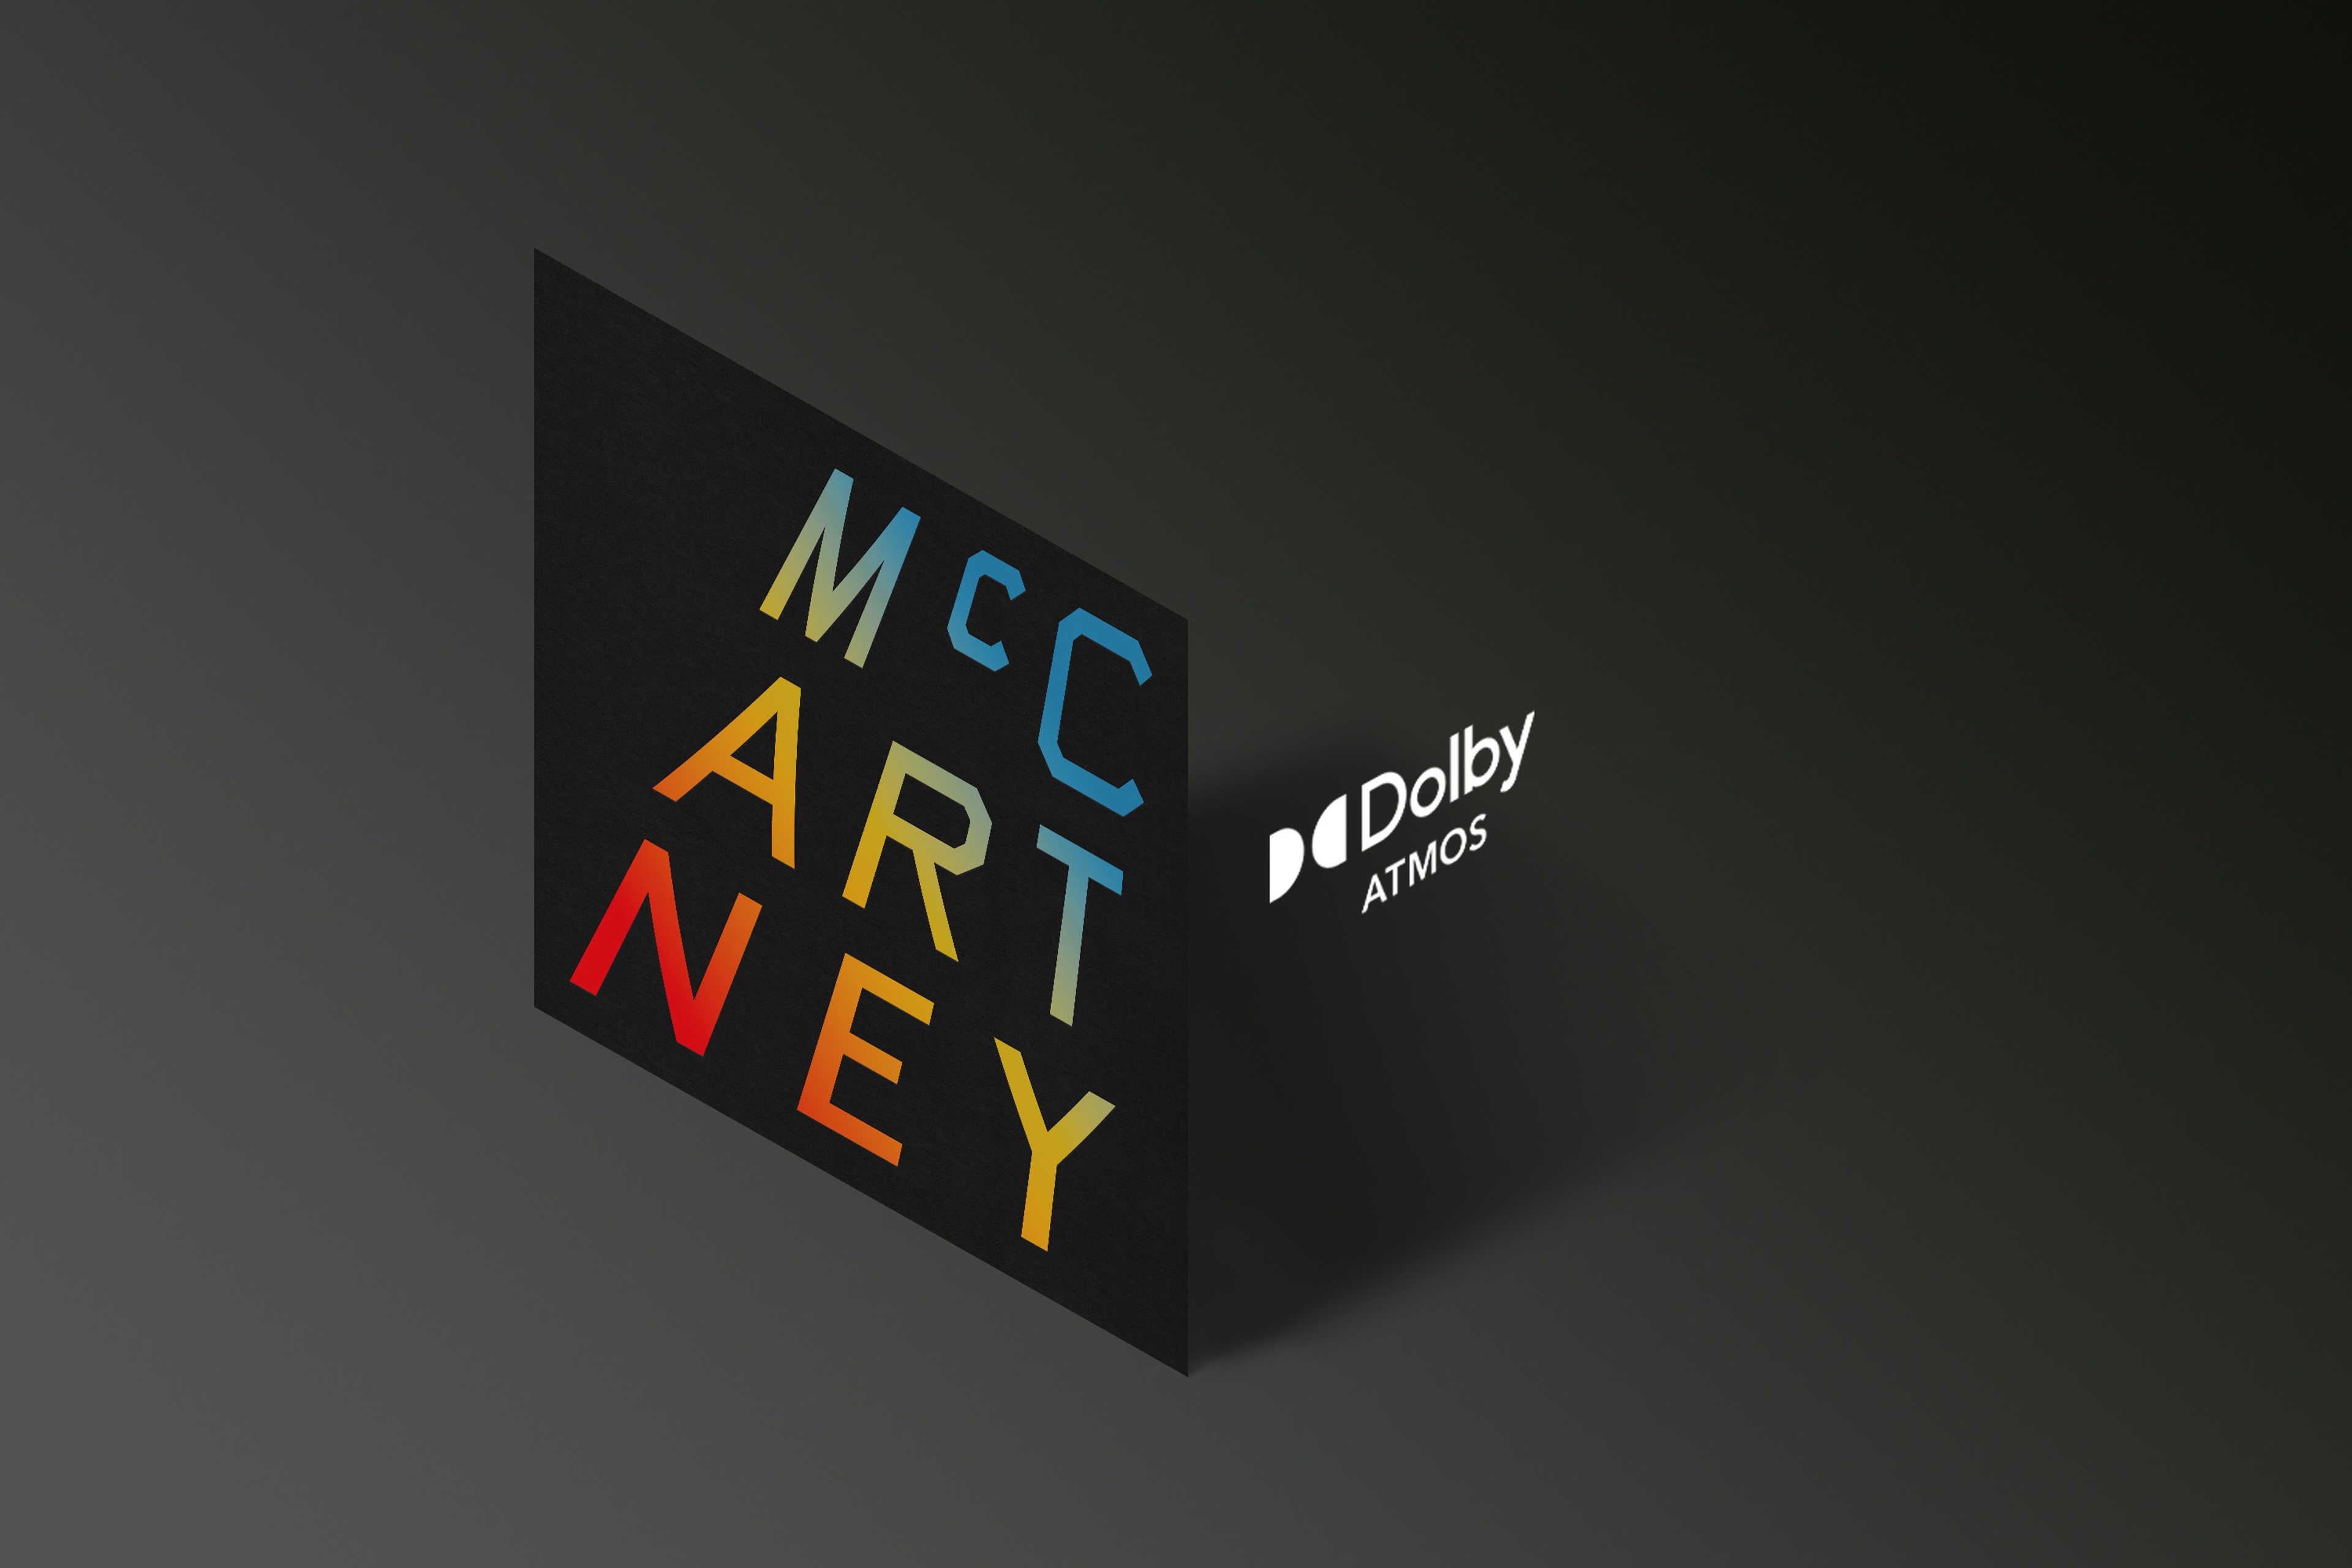 McCartney I II III logo positioned next to Dolby Atmos logo